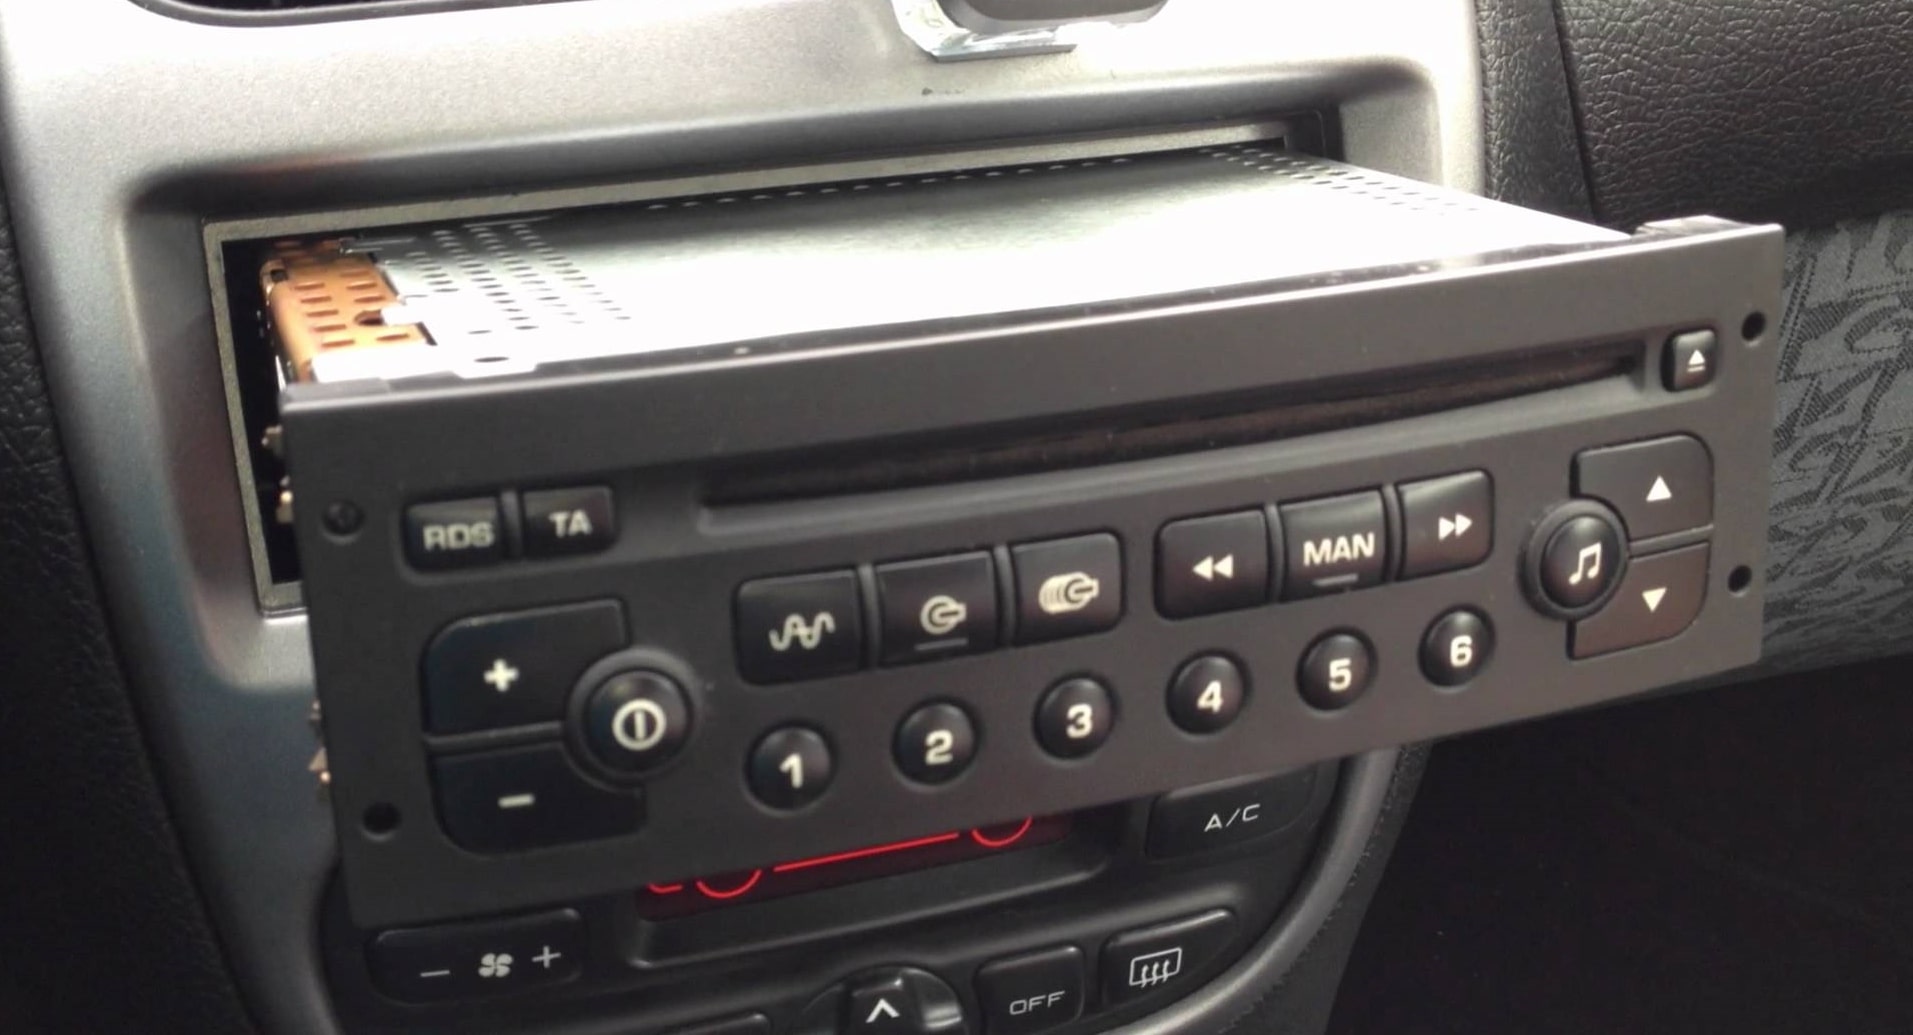 Peugeot Radio Code Decoder - Radio Codes Calculator